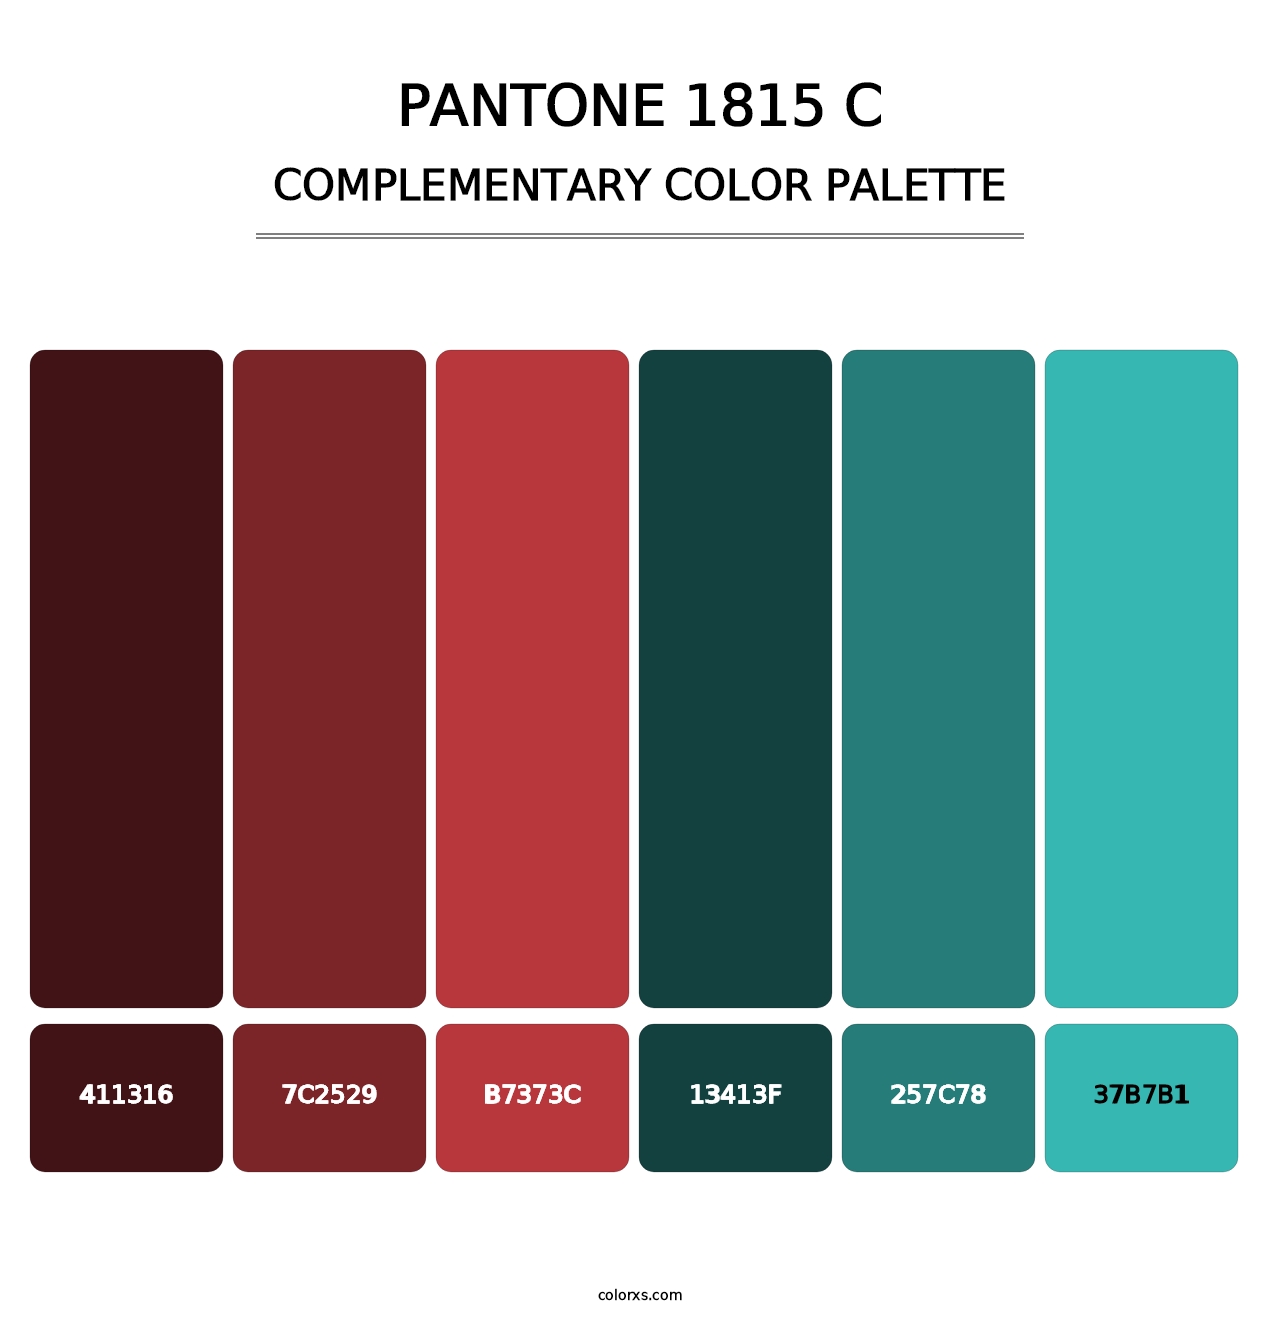 PANTONE 1815 C - Complementary Color Palette